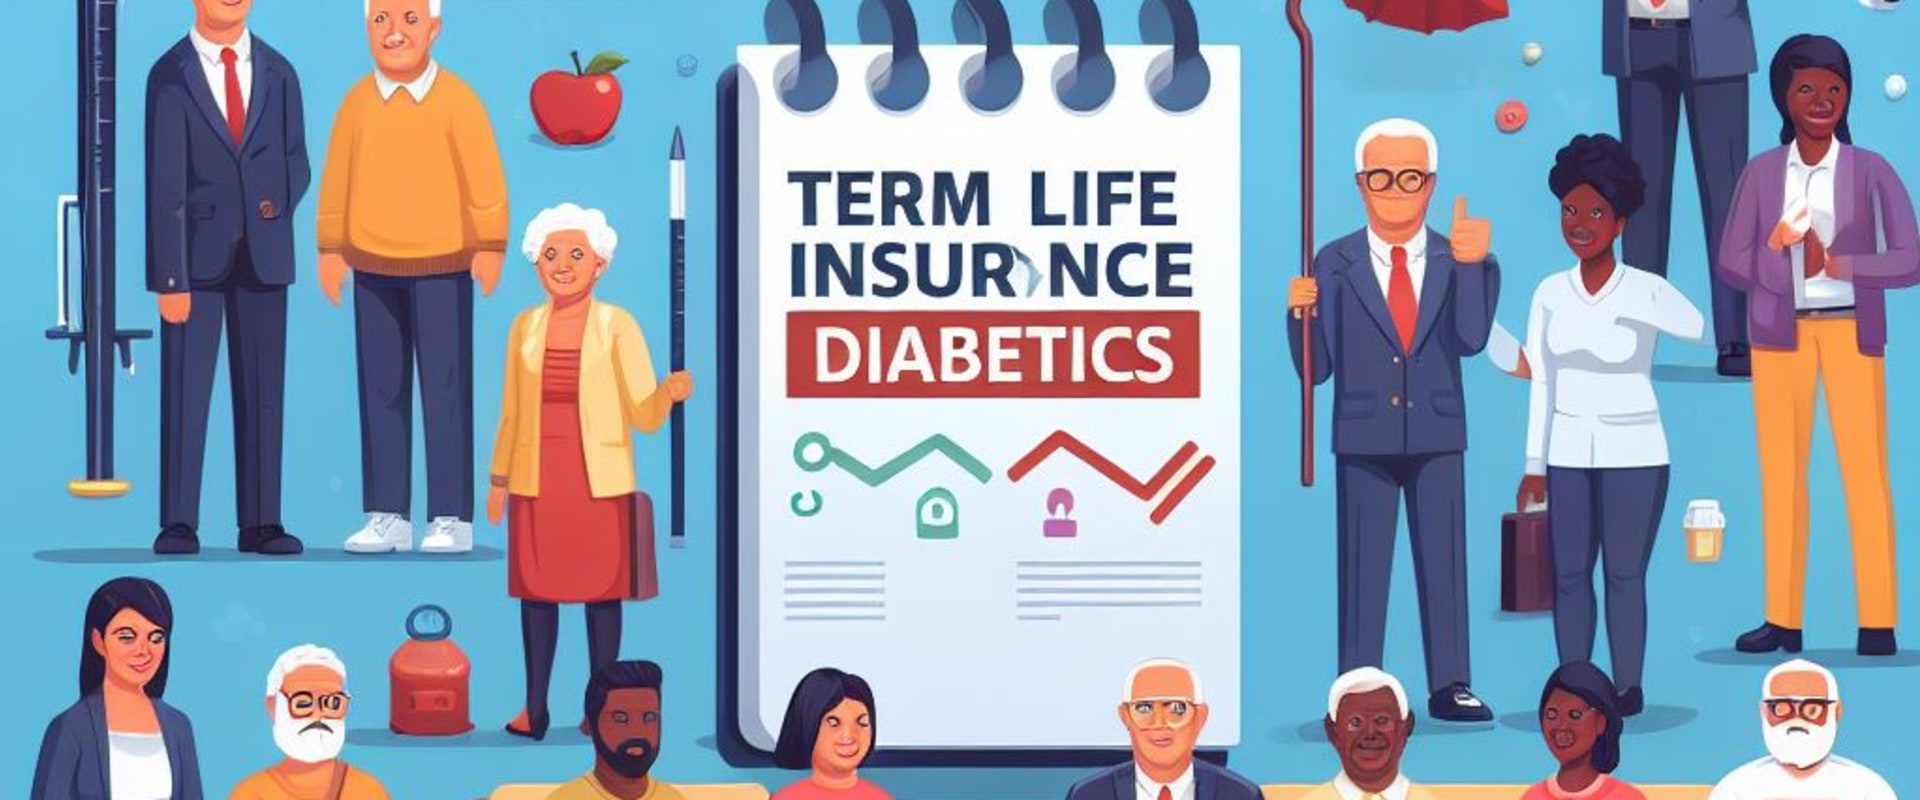 term life insurance for diabetics